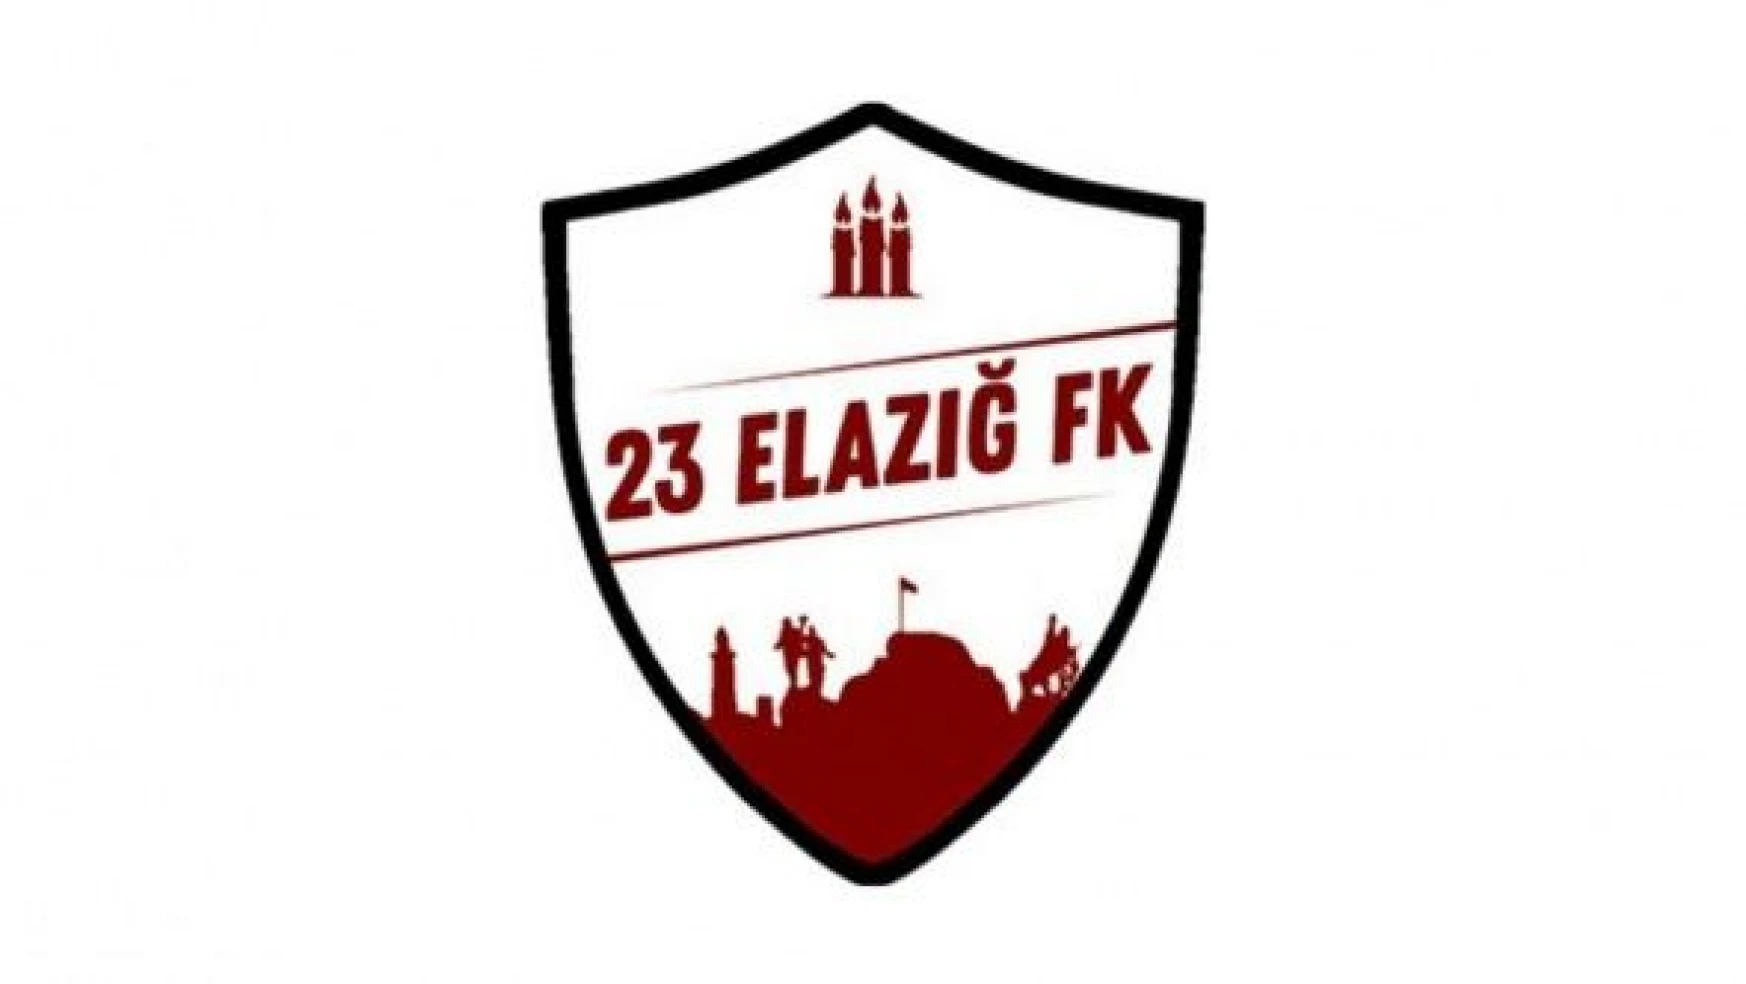 23 Elazığ FK 3-3 Kahramanmaraşspor